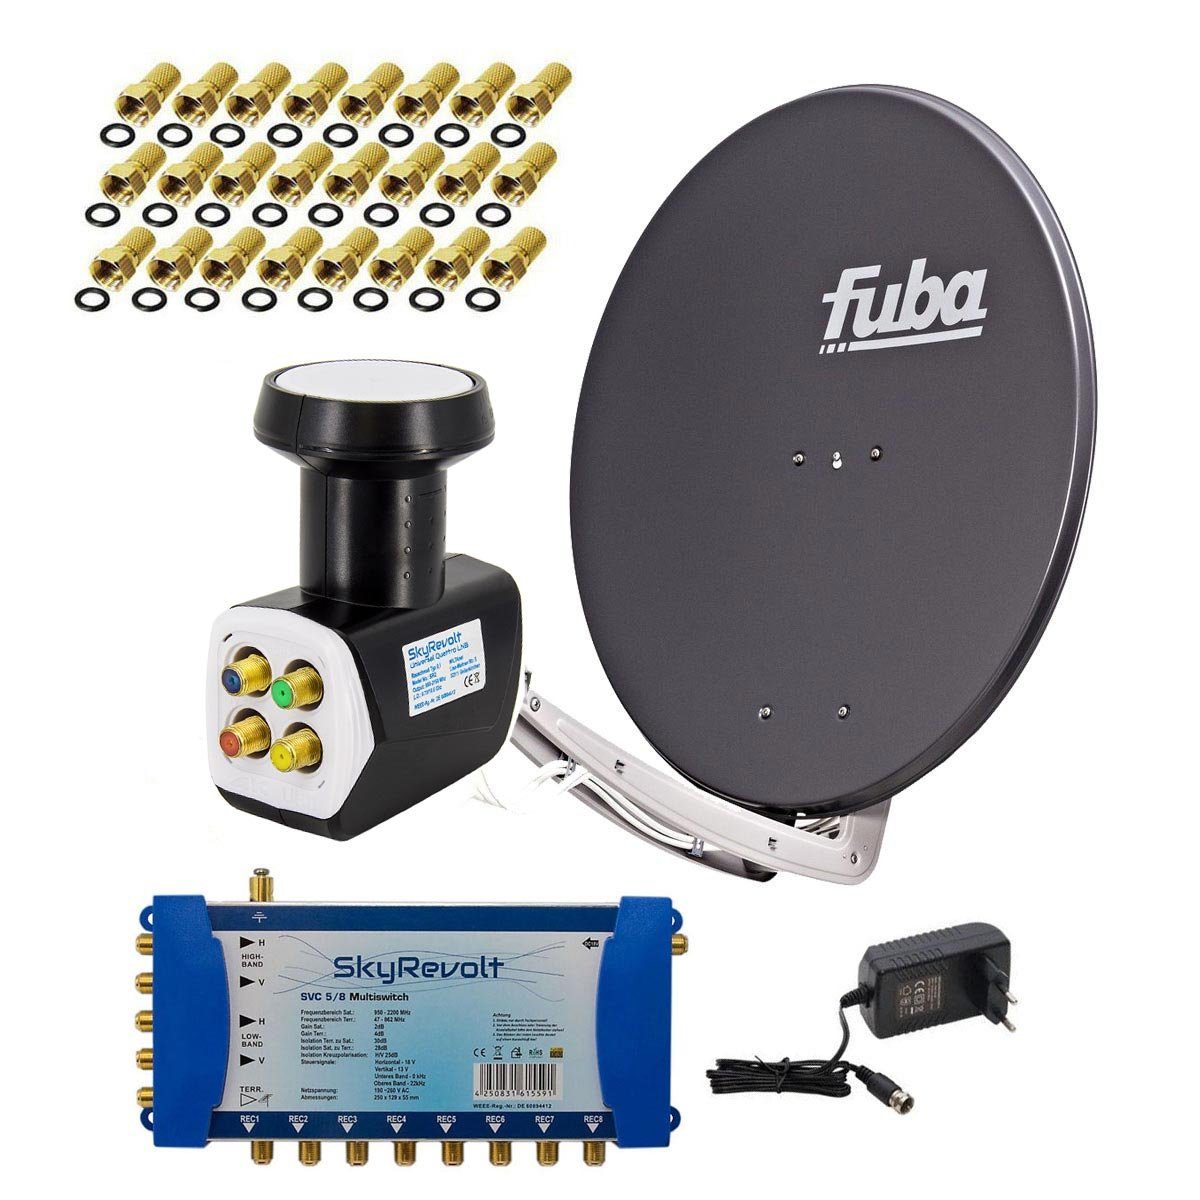 fuba Fuba DAA 850 A SAT Anlage ALU Anthrazit 5/8 Multischalter LNB SAT-Antenne